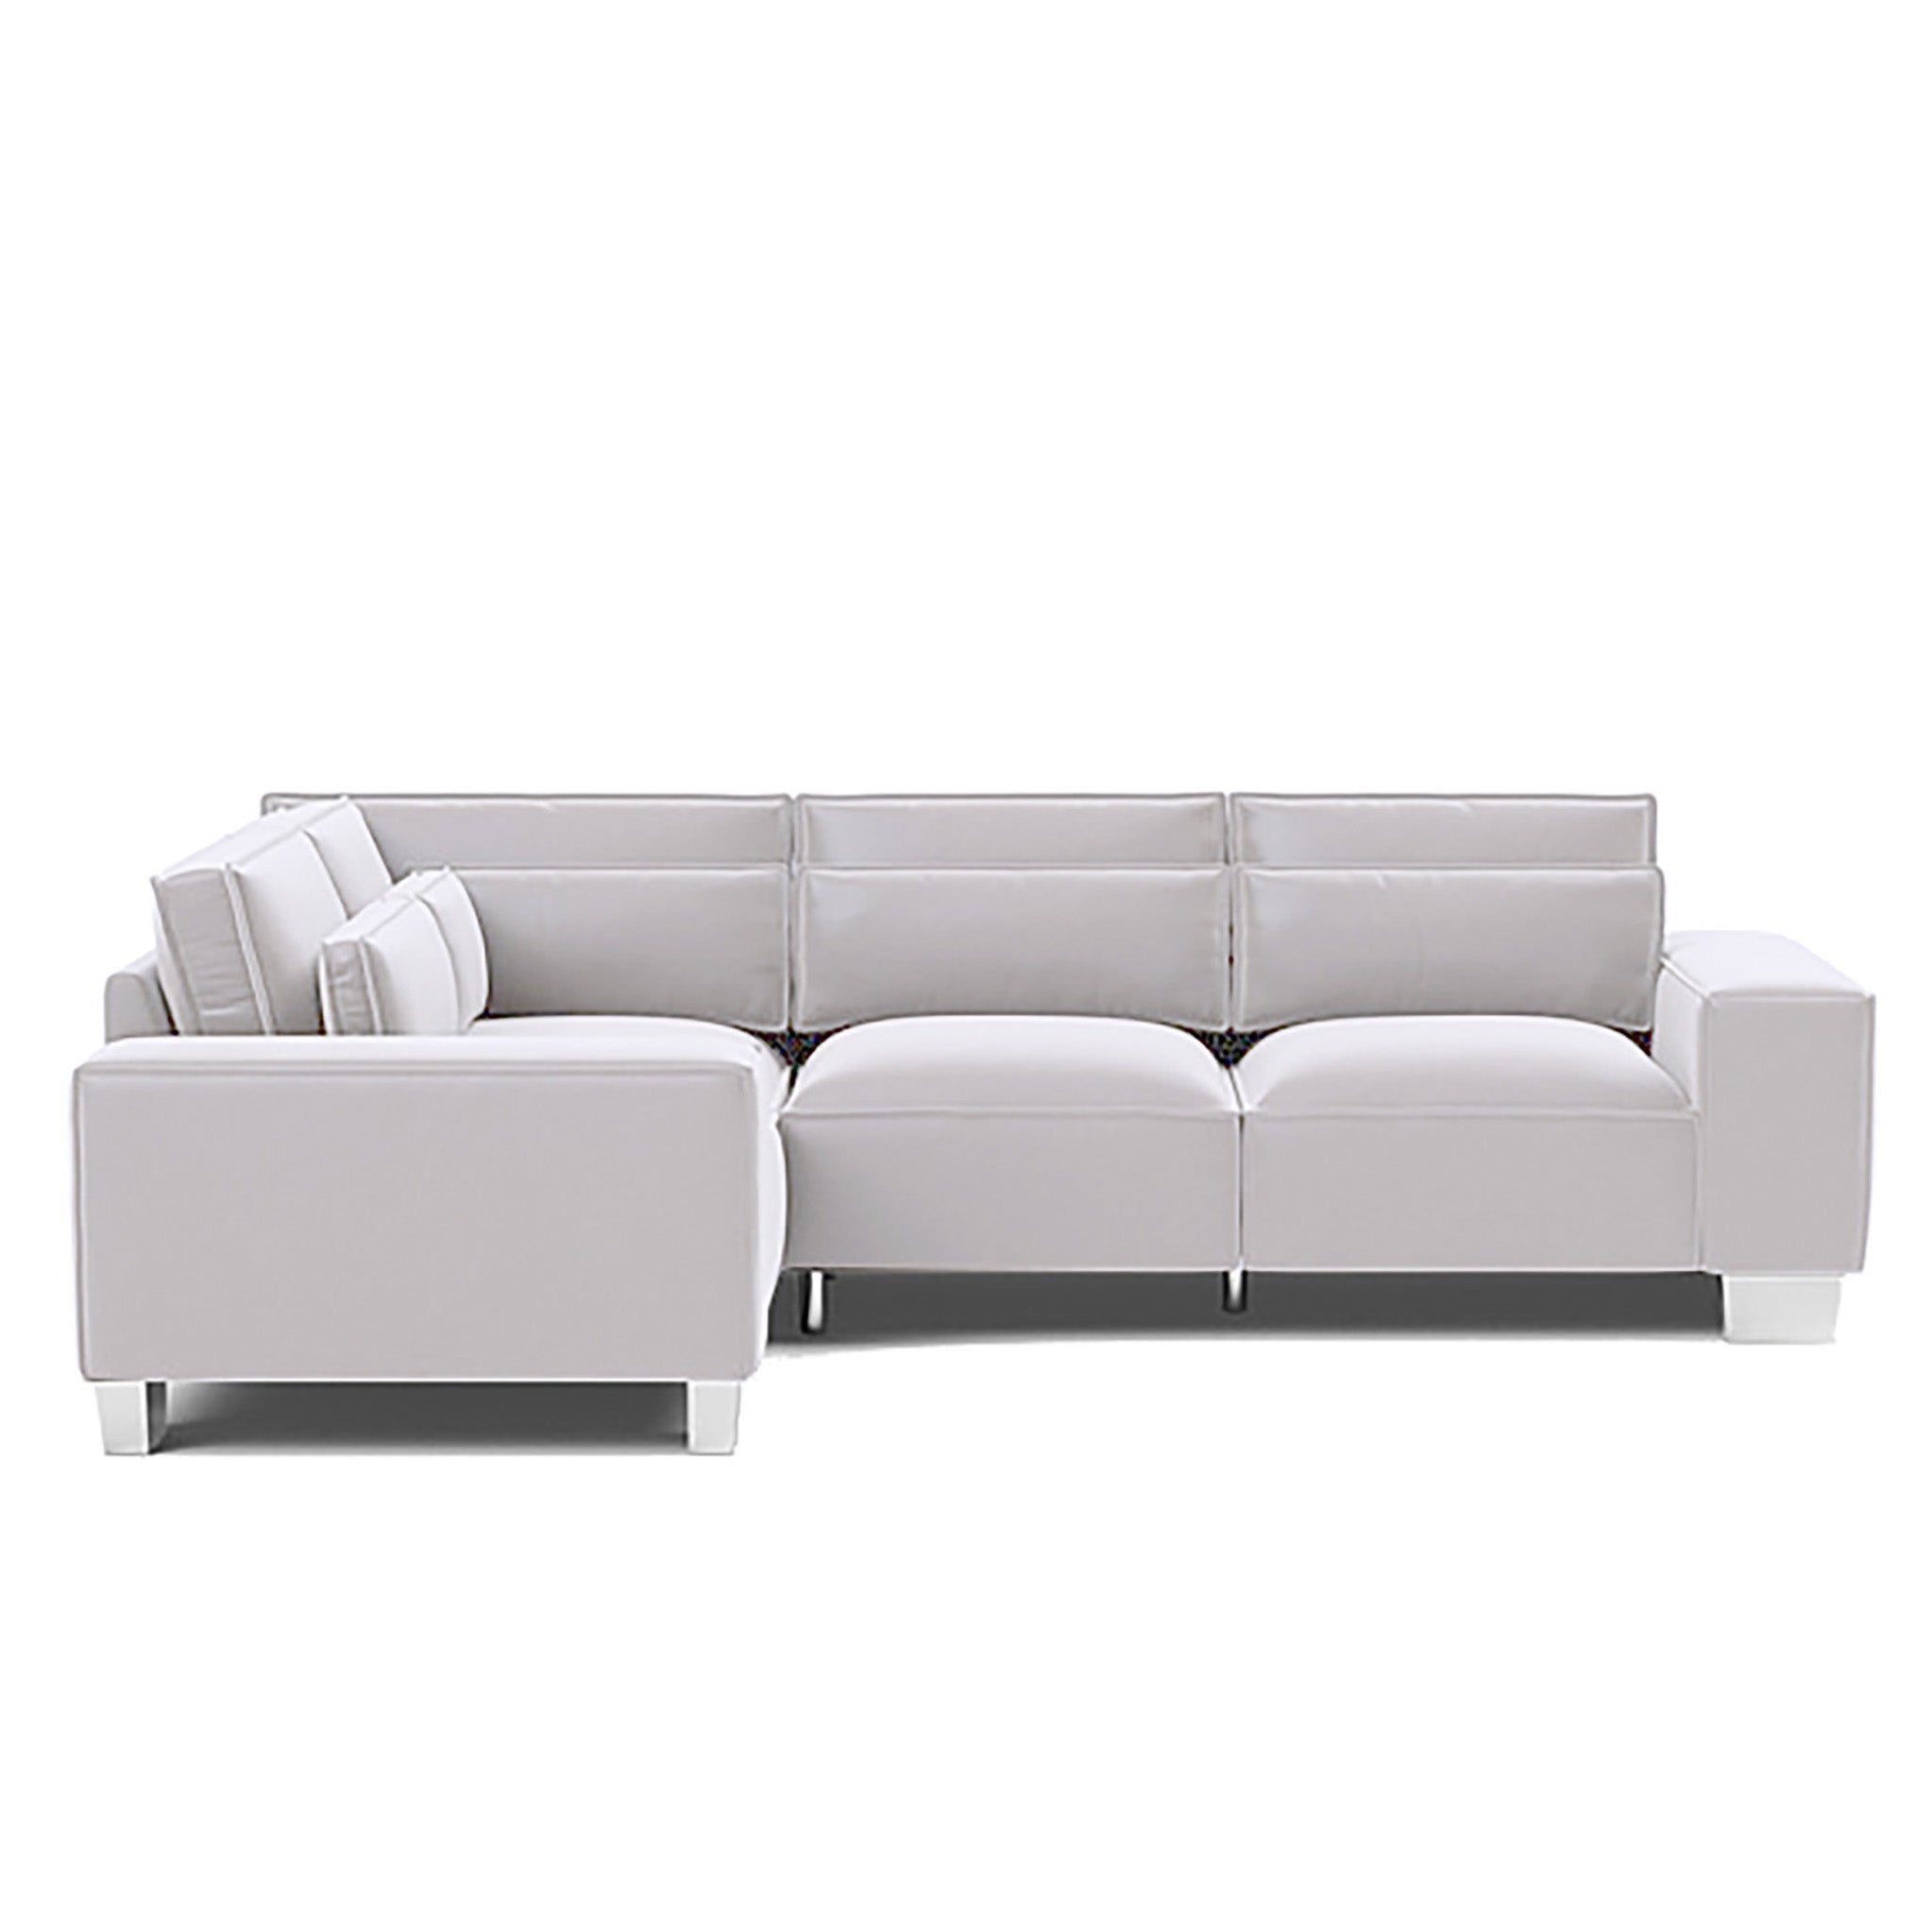 Sloane Luxury Chenille Corner Sofa Grey Fabric Couch Roseland